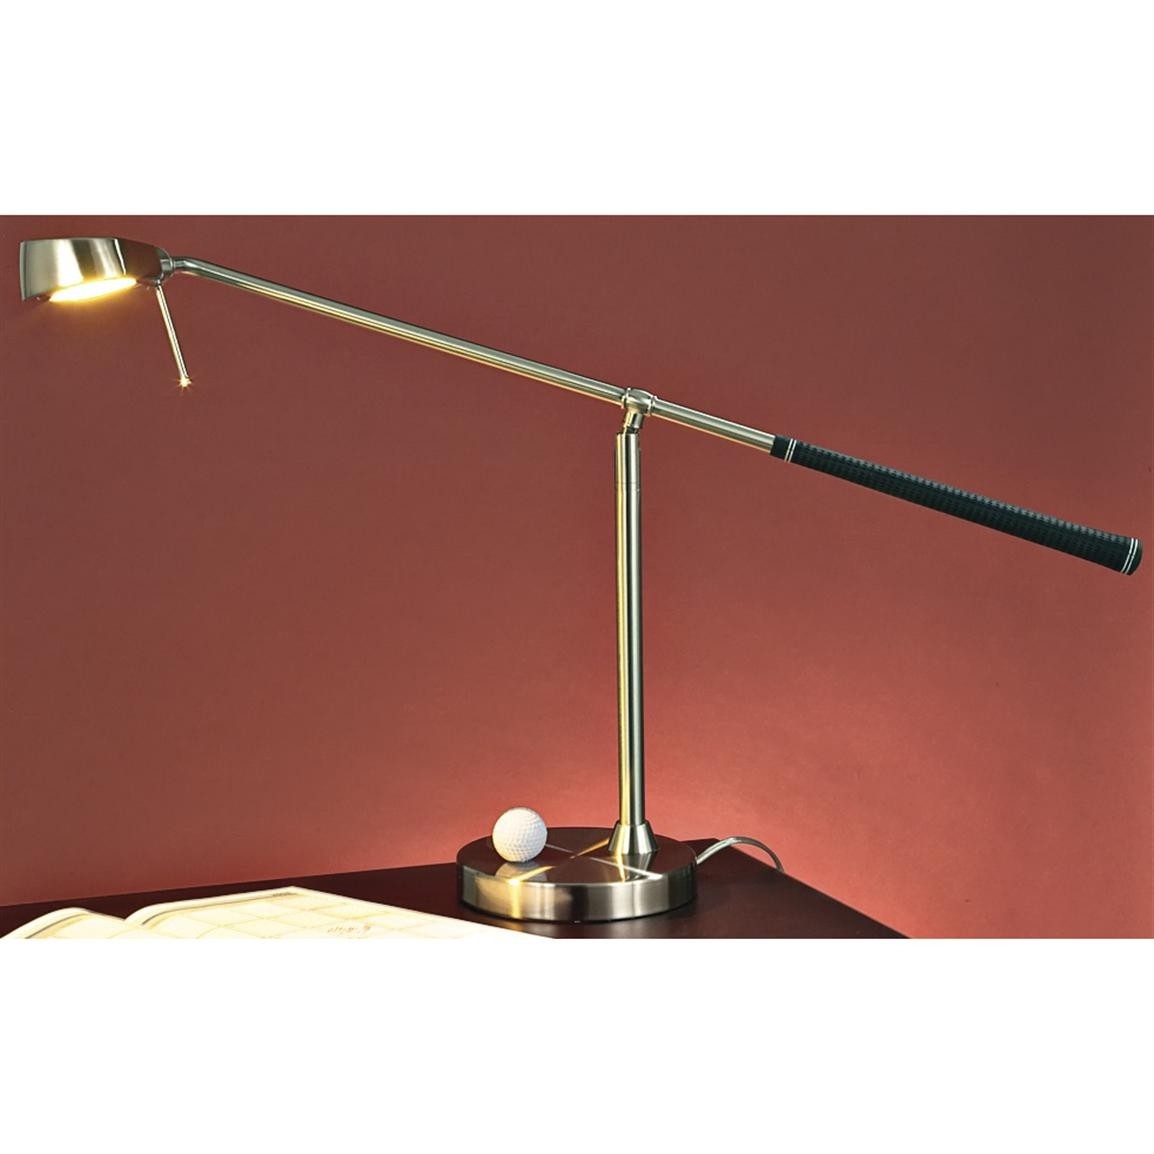 Adjustable halogen 7 iron golf club lamp 136381